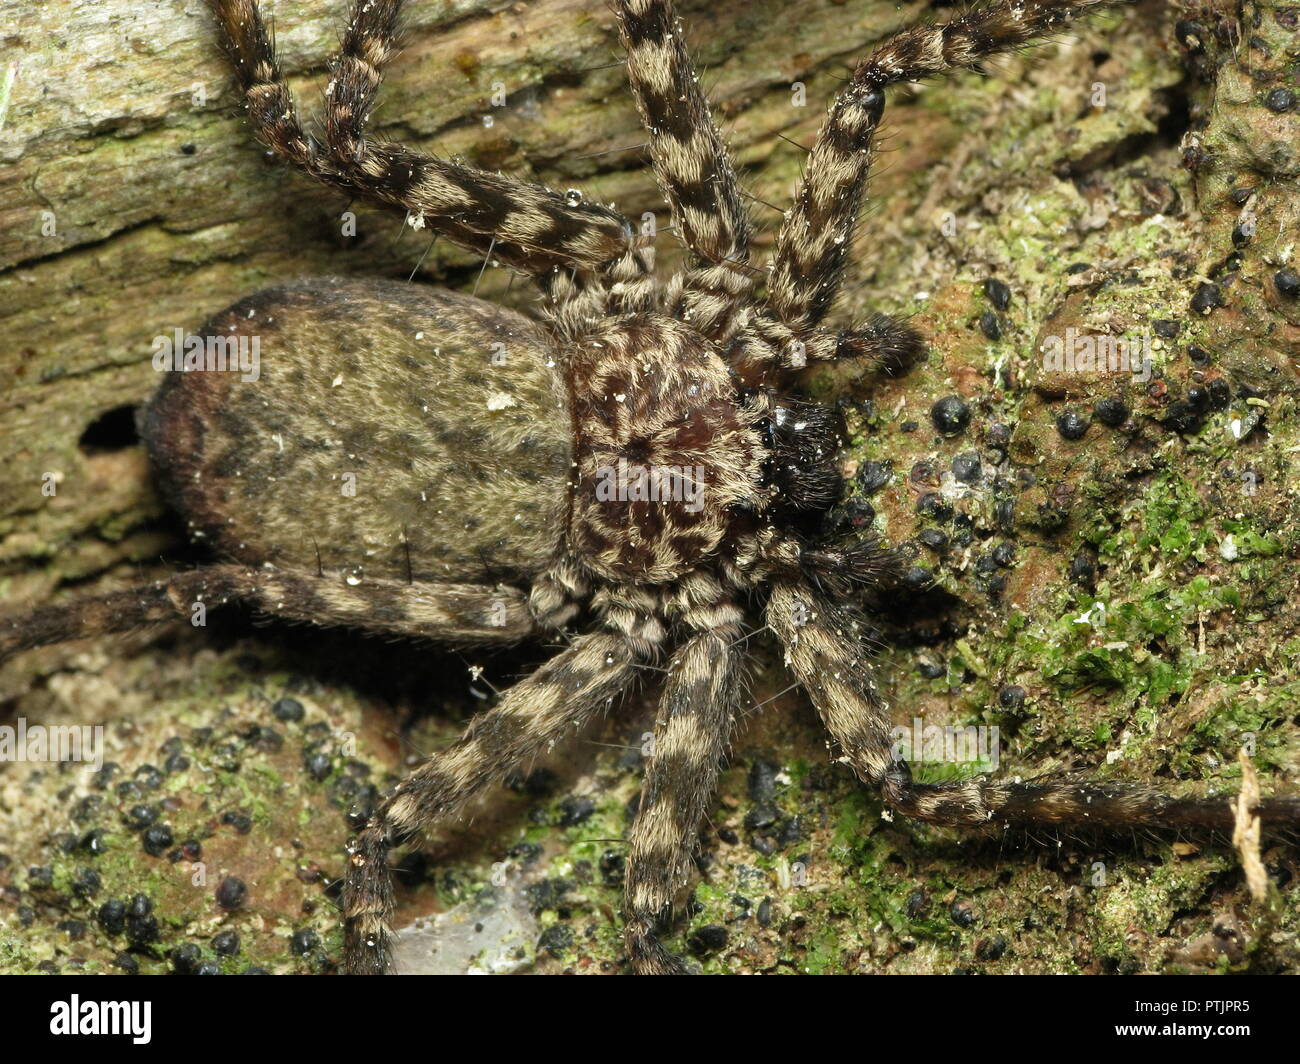 Flattie spider (Selenopidae, Selenops) camouflaged on a mossy tree trunk, top view macro Stock Photo